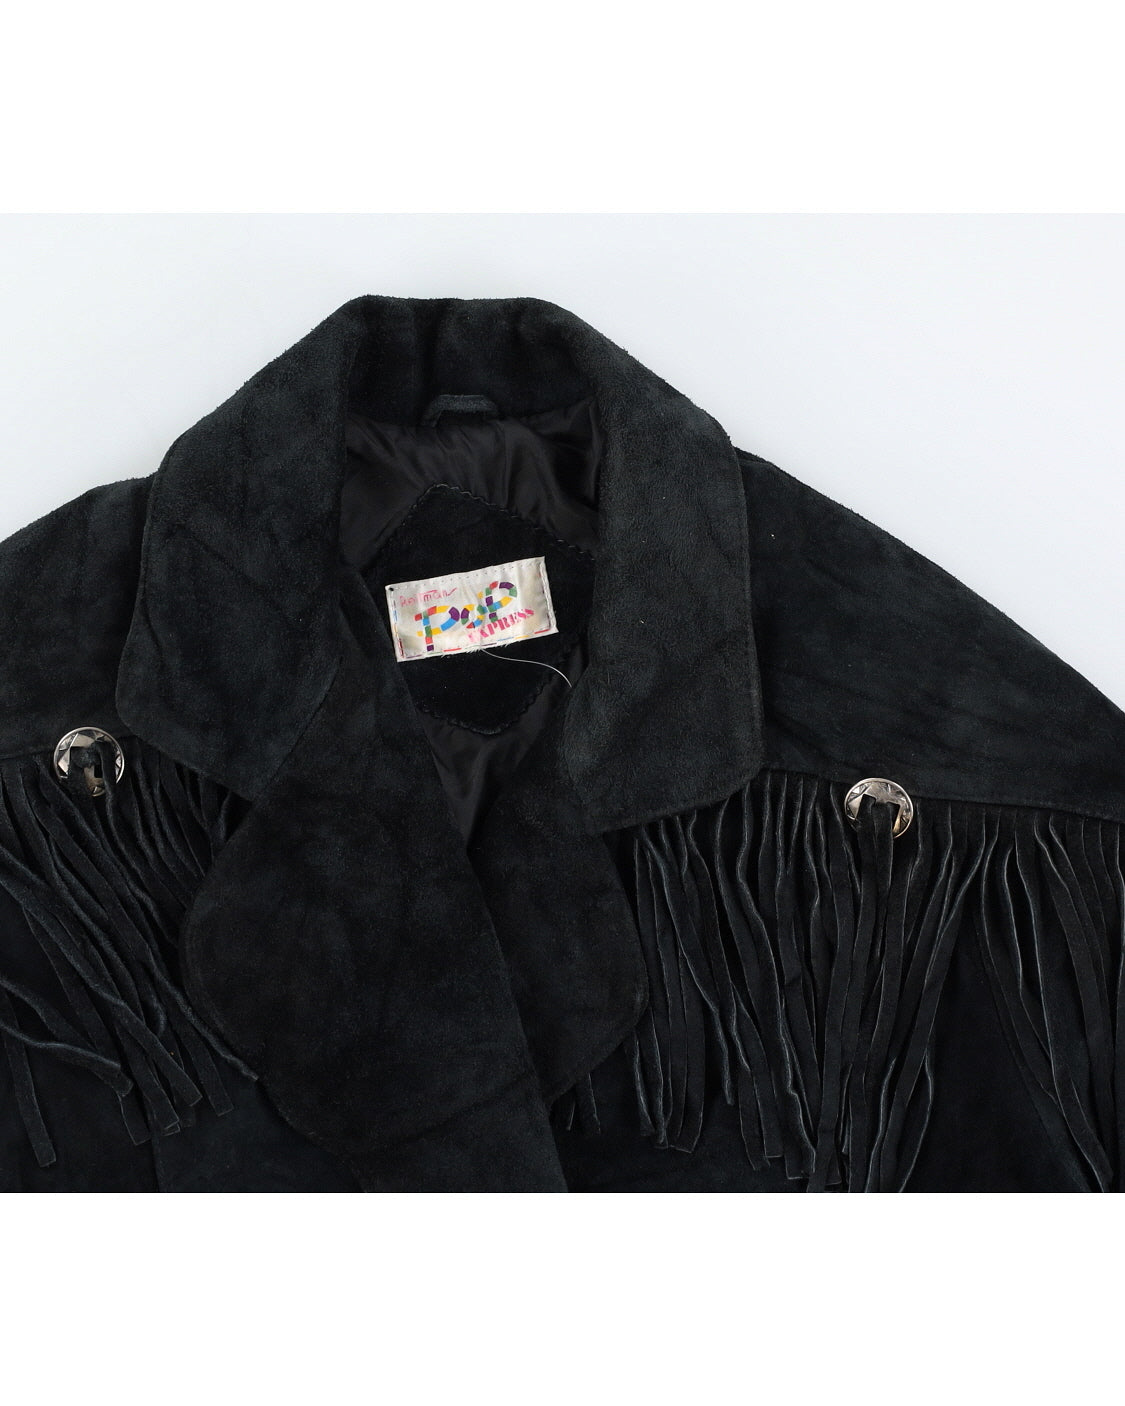 Vintage 80s Black Cropped Suede Tassel Jacket - M